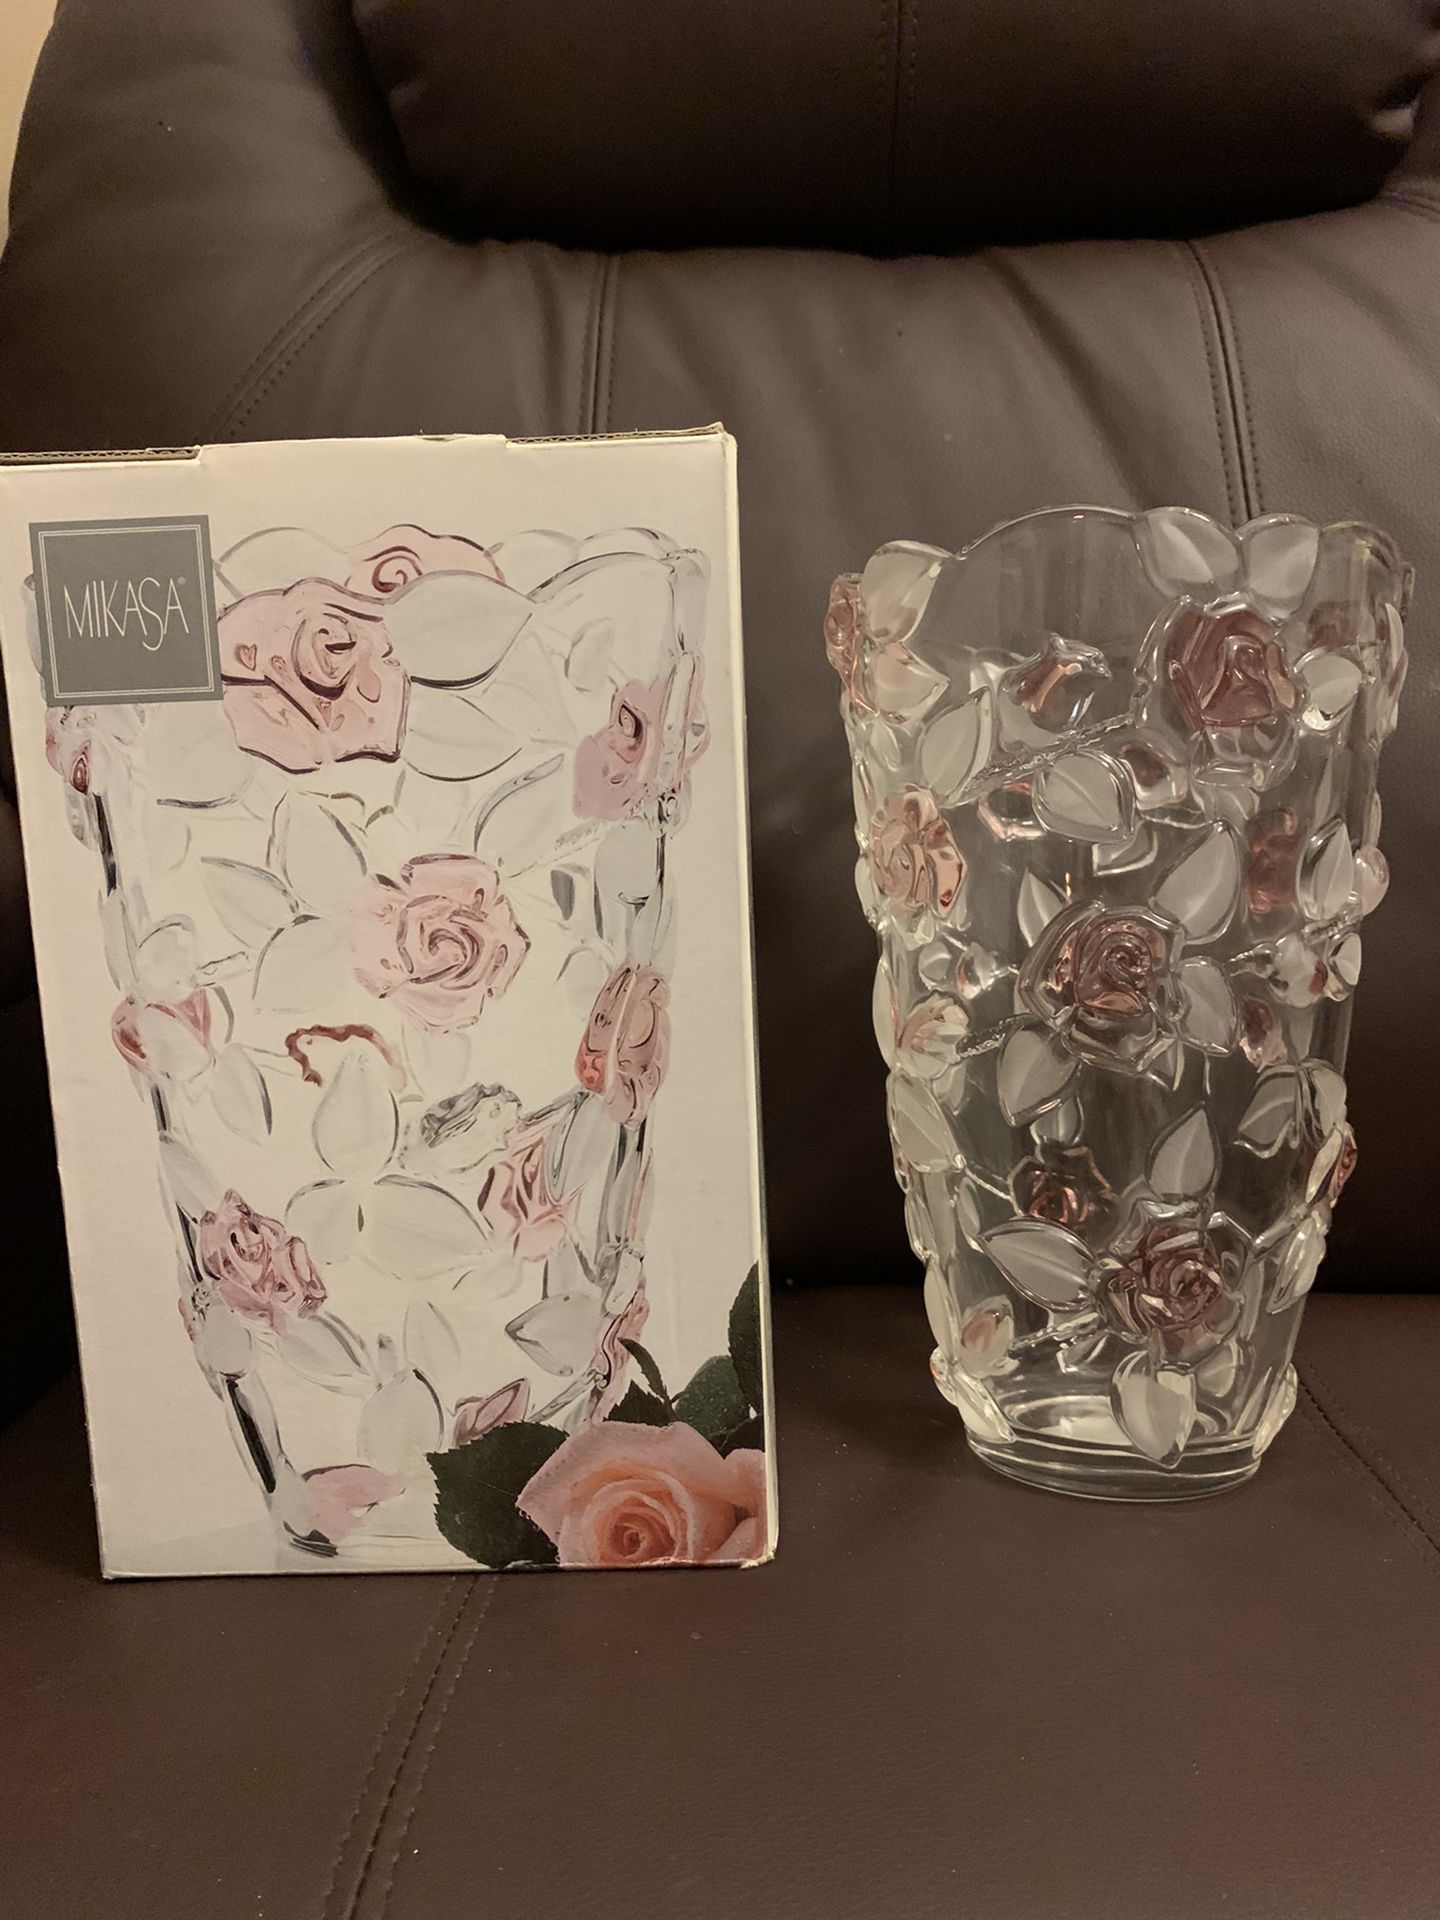 Mikasa Bella Rosa vase